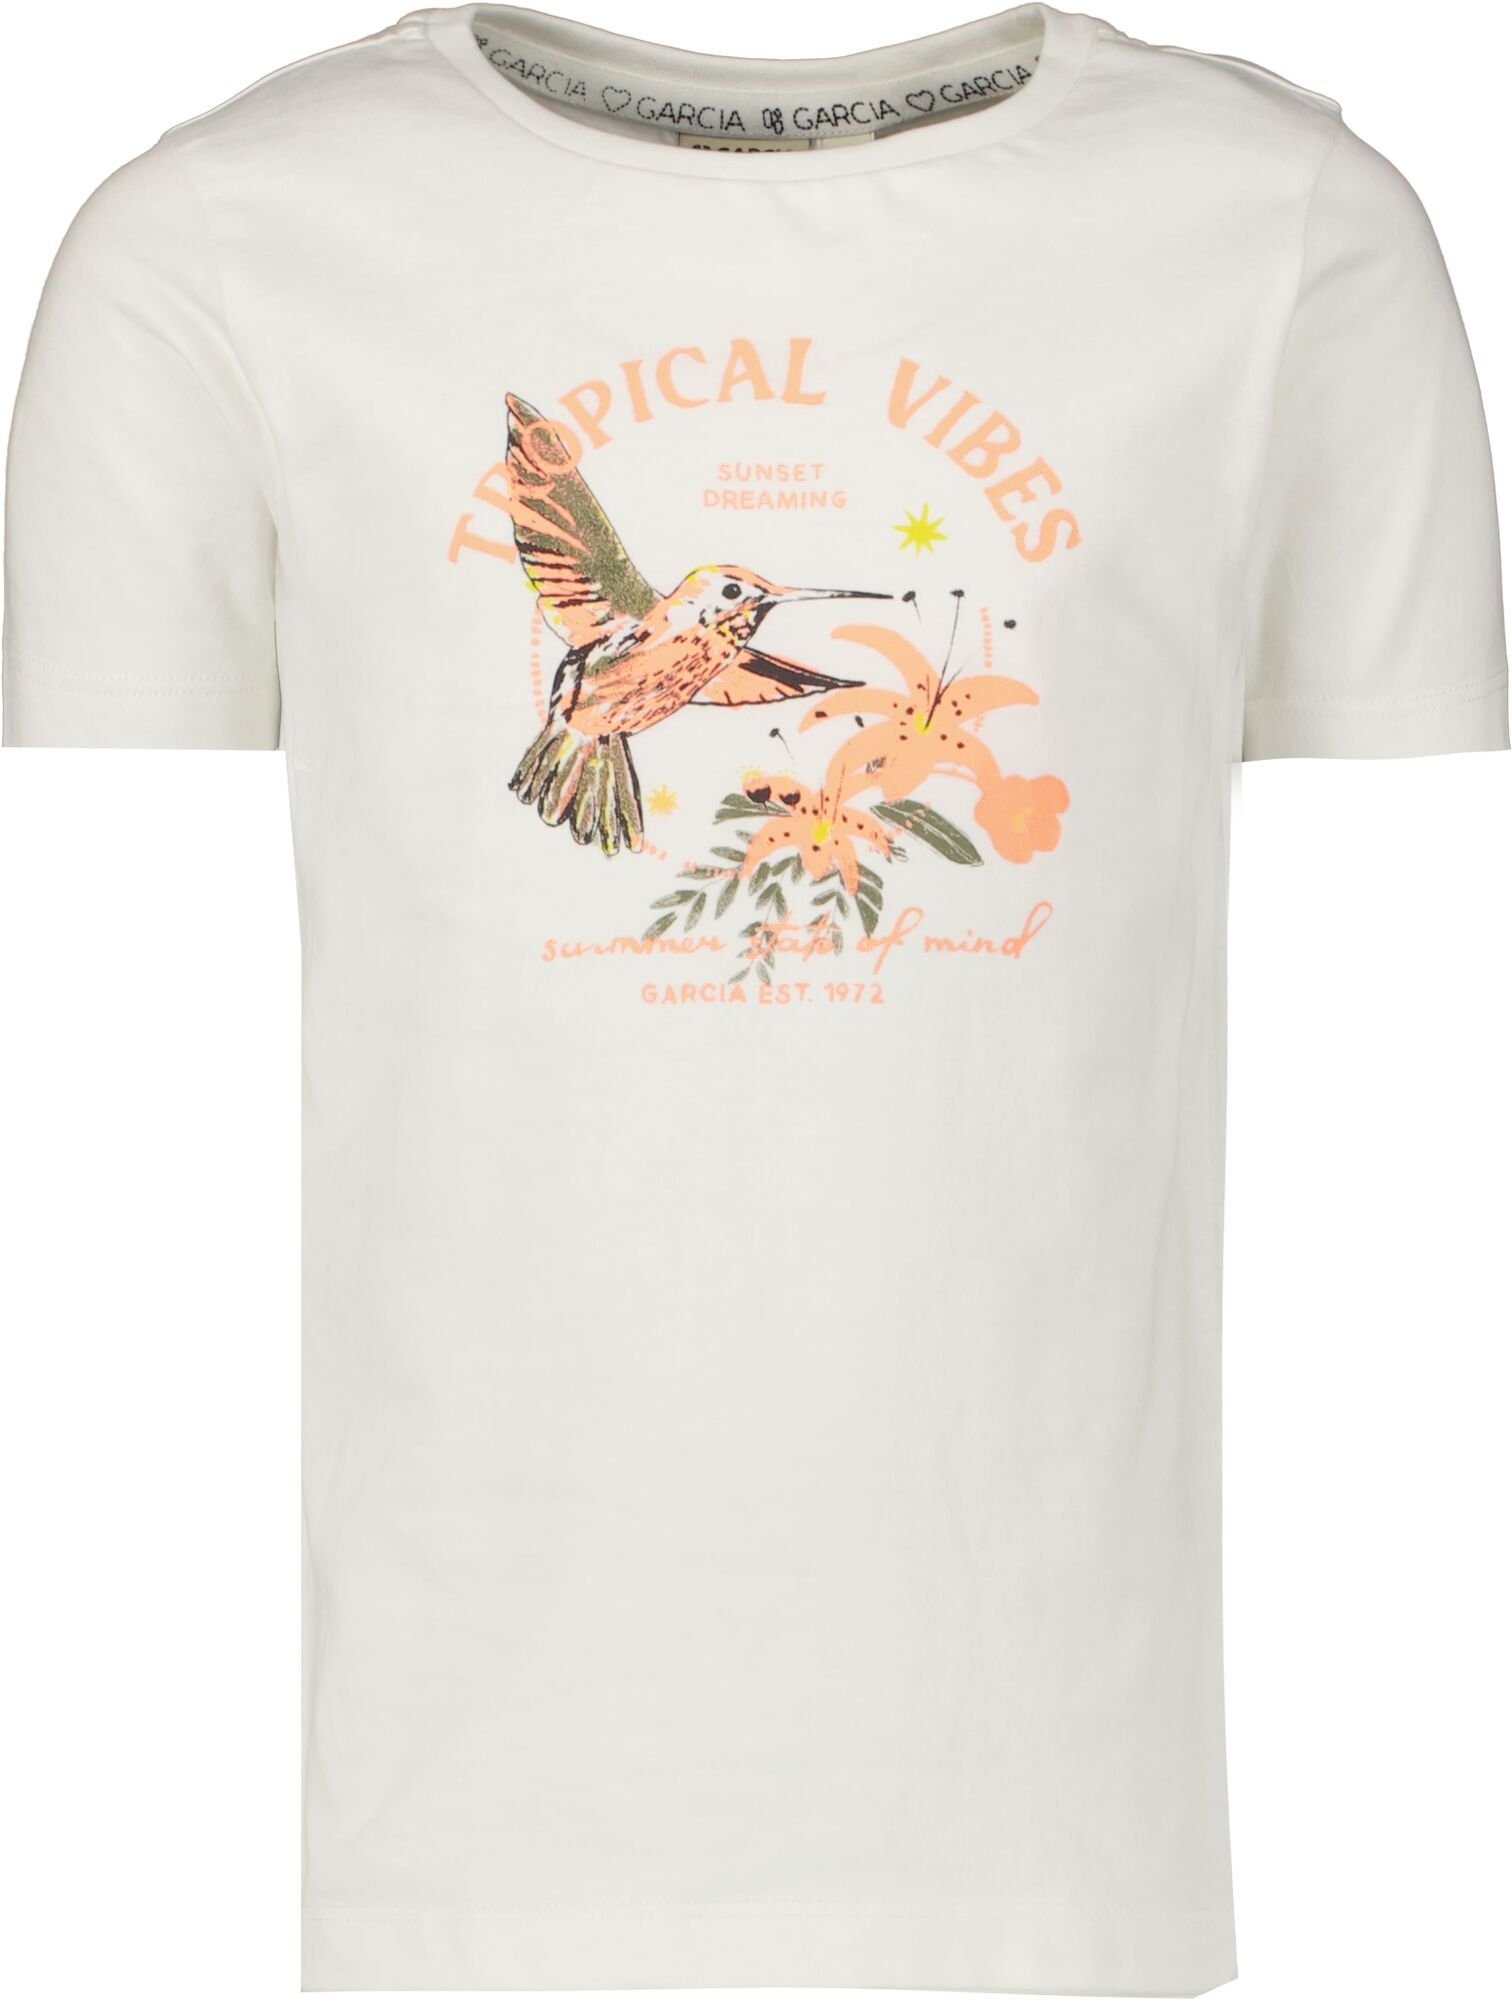 Garcia T-Shirt Tropical Vibes